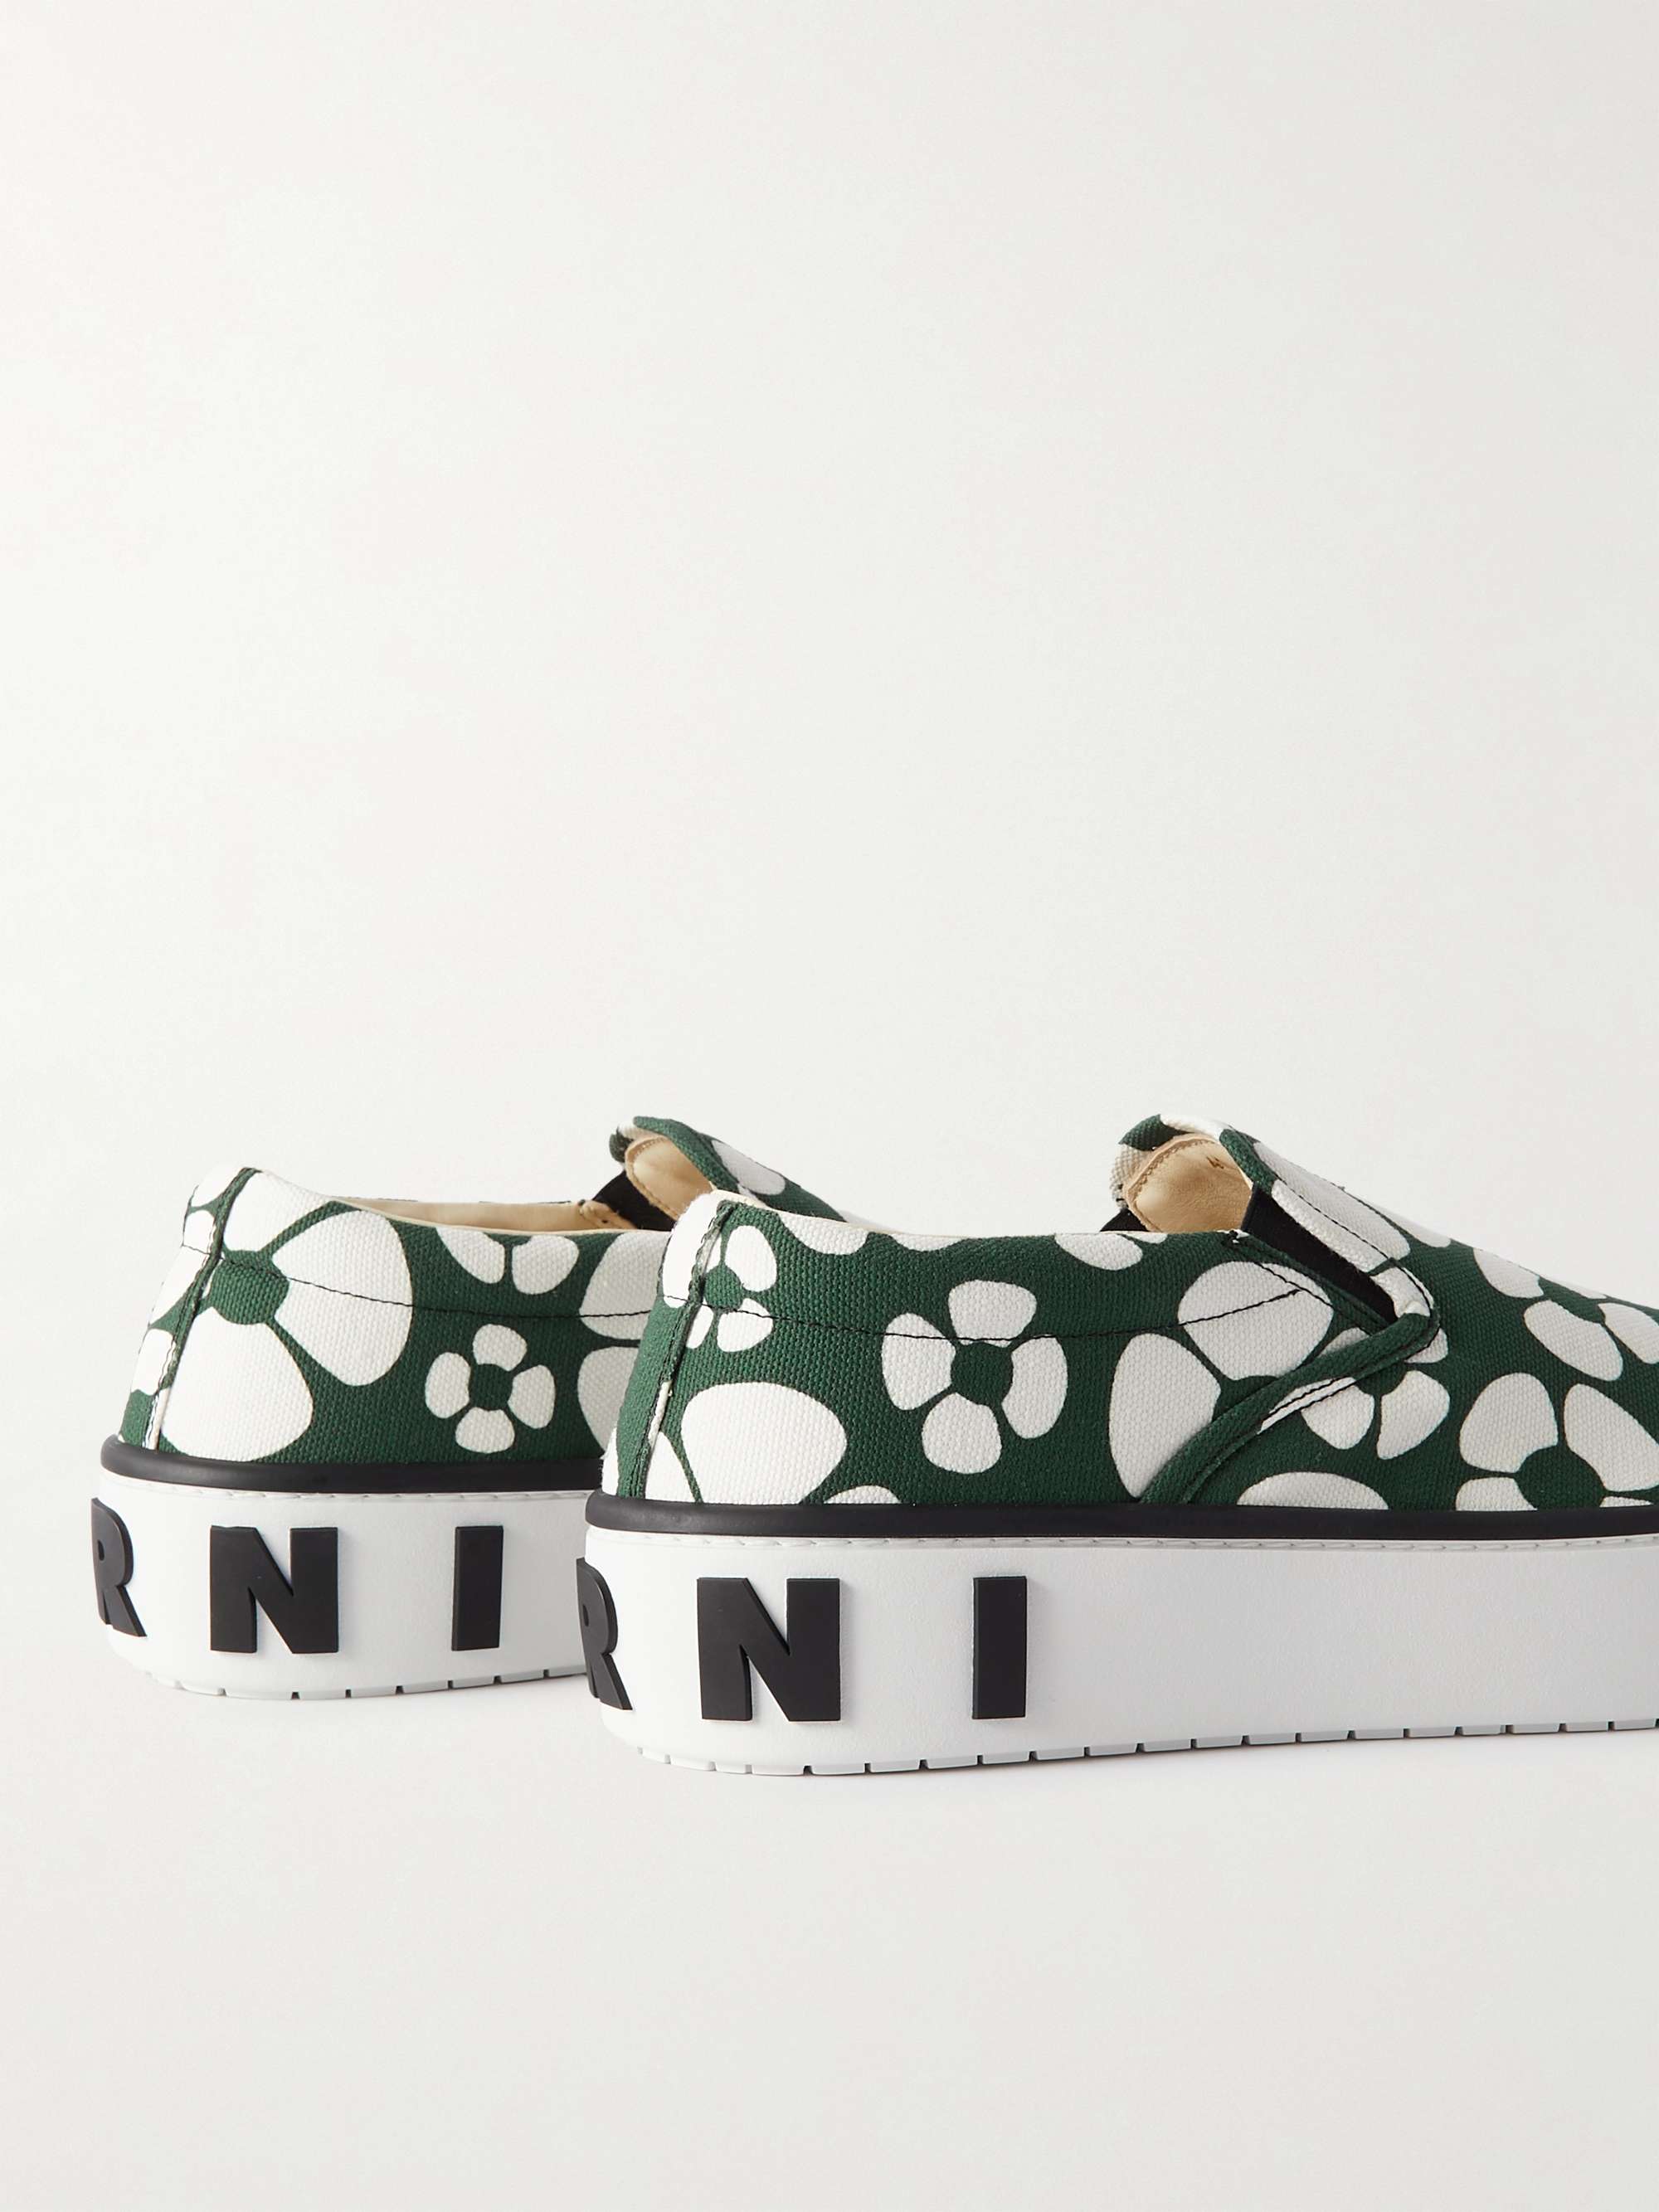 MARNI + Carhartt WIP Floral-Print Canvas Slip-On Sneakers